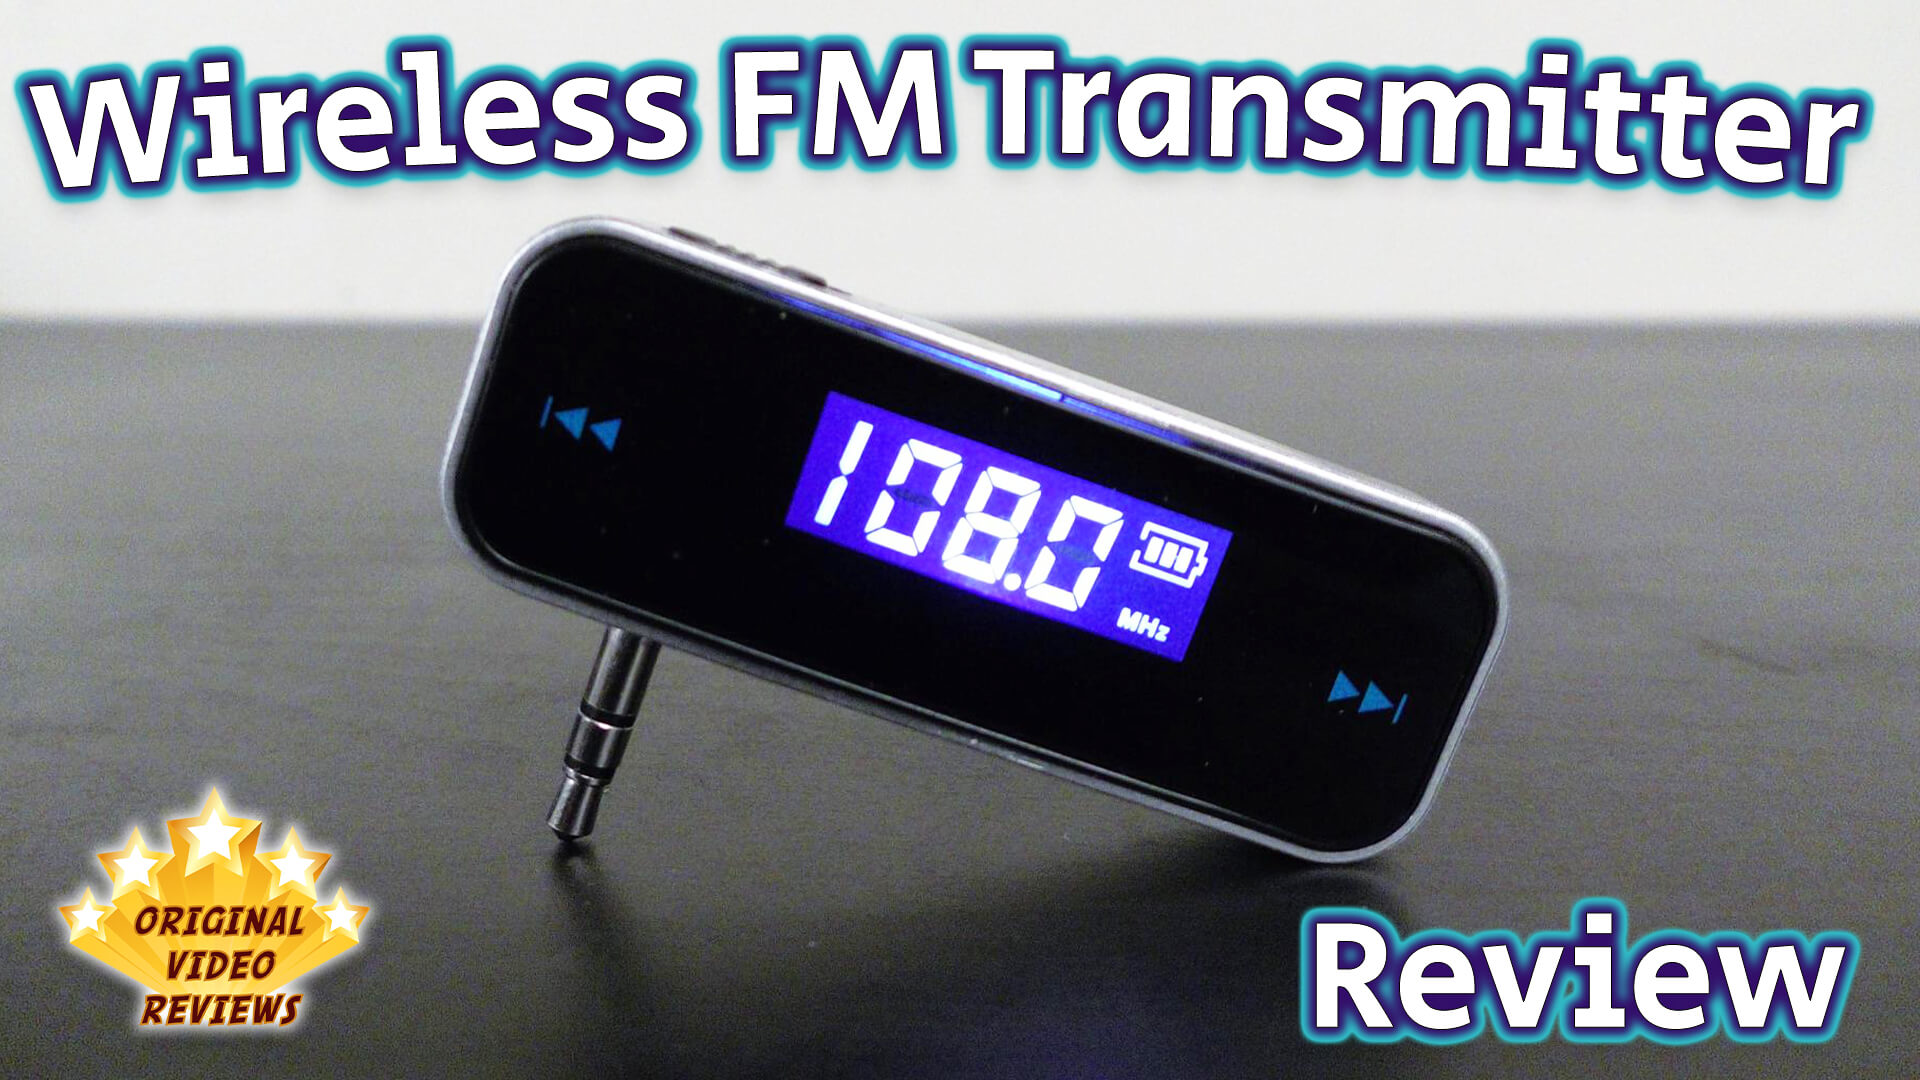 Wireless FM Audio Transmitter Review (Thumbnail)